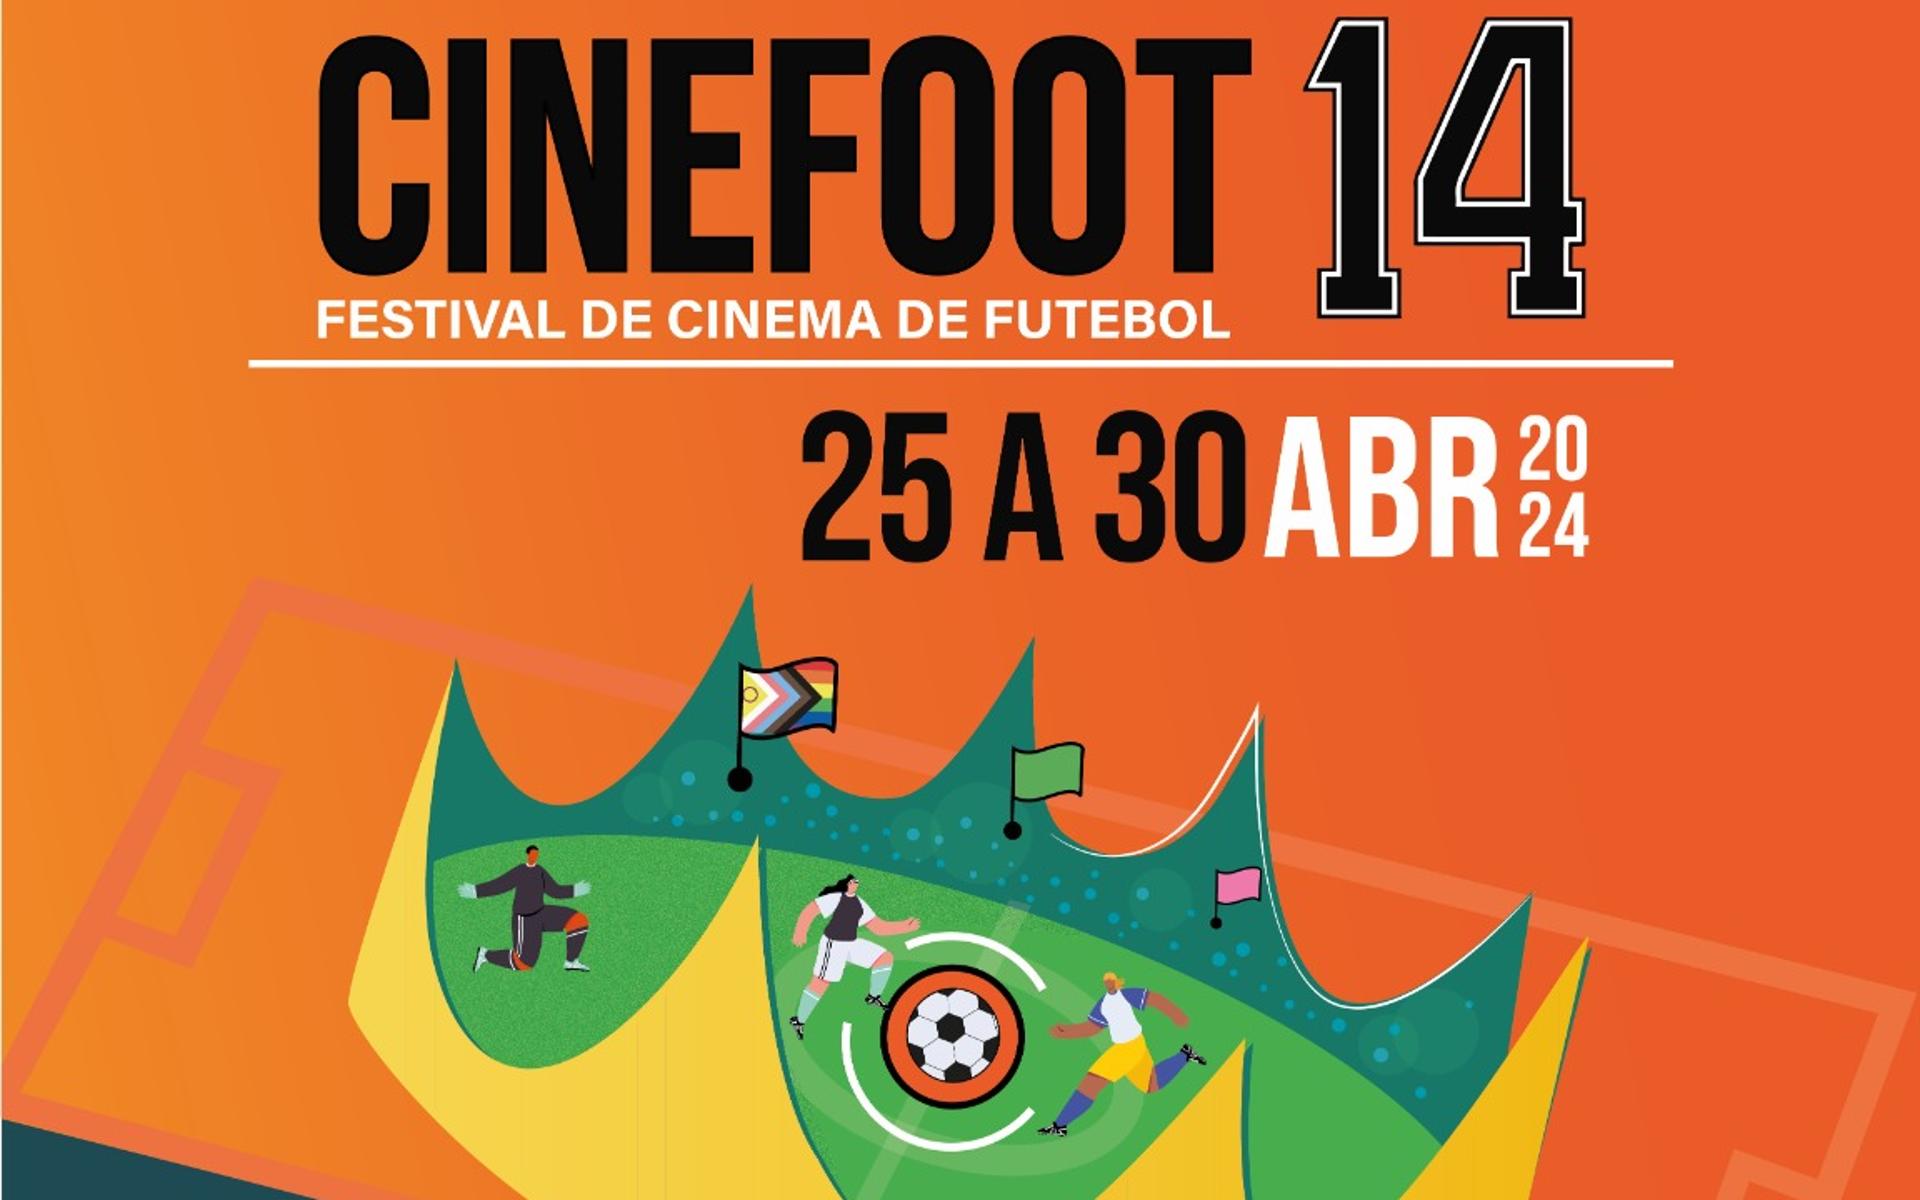 Cinefoot-aspect-ratio-512-320